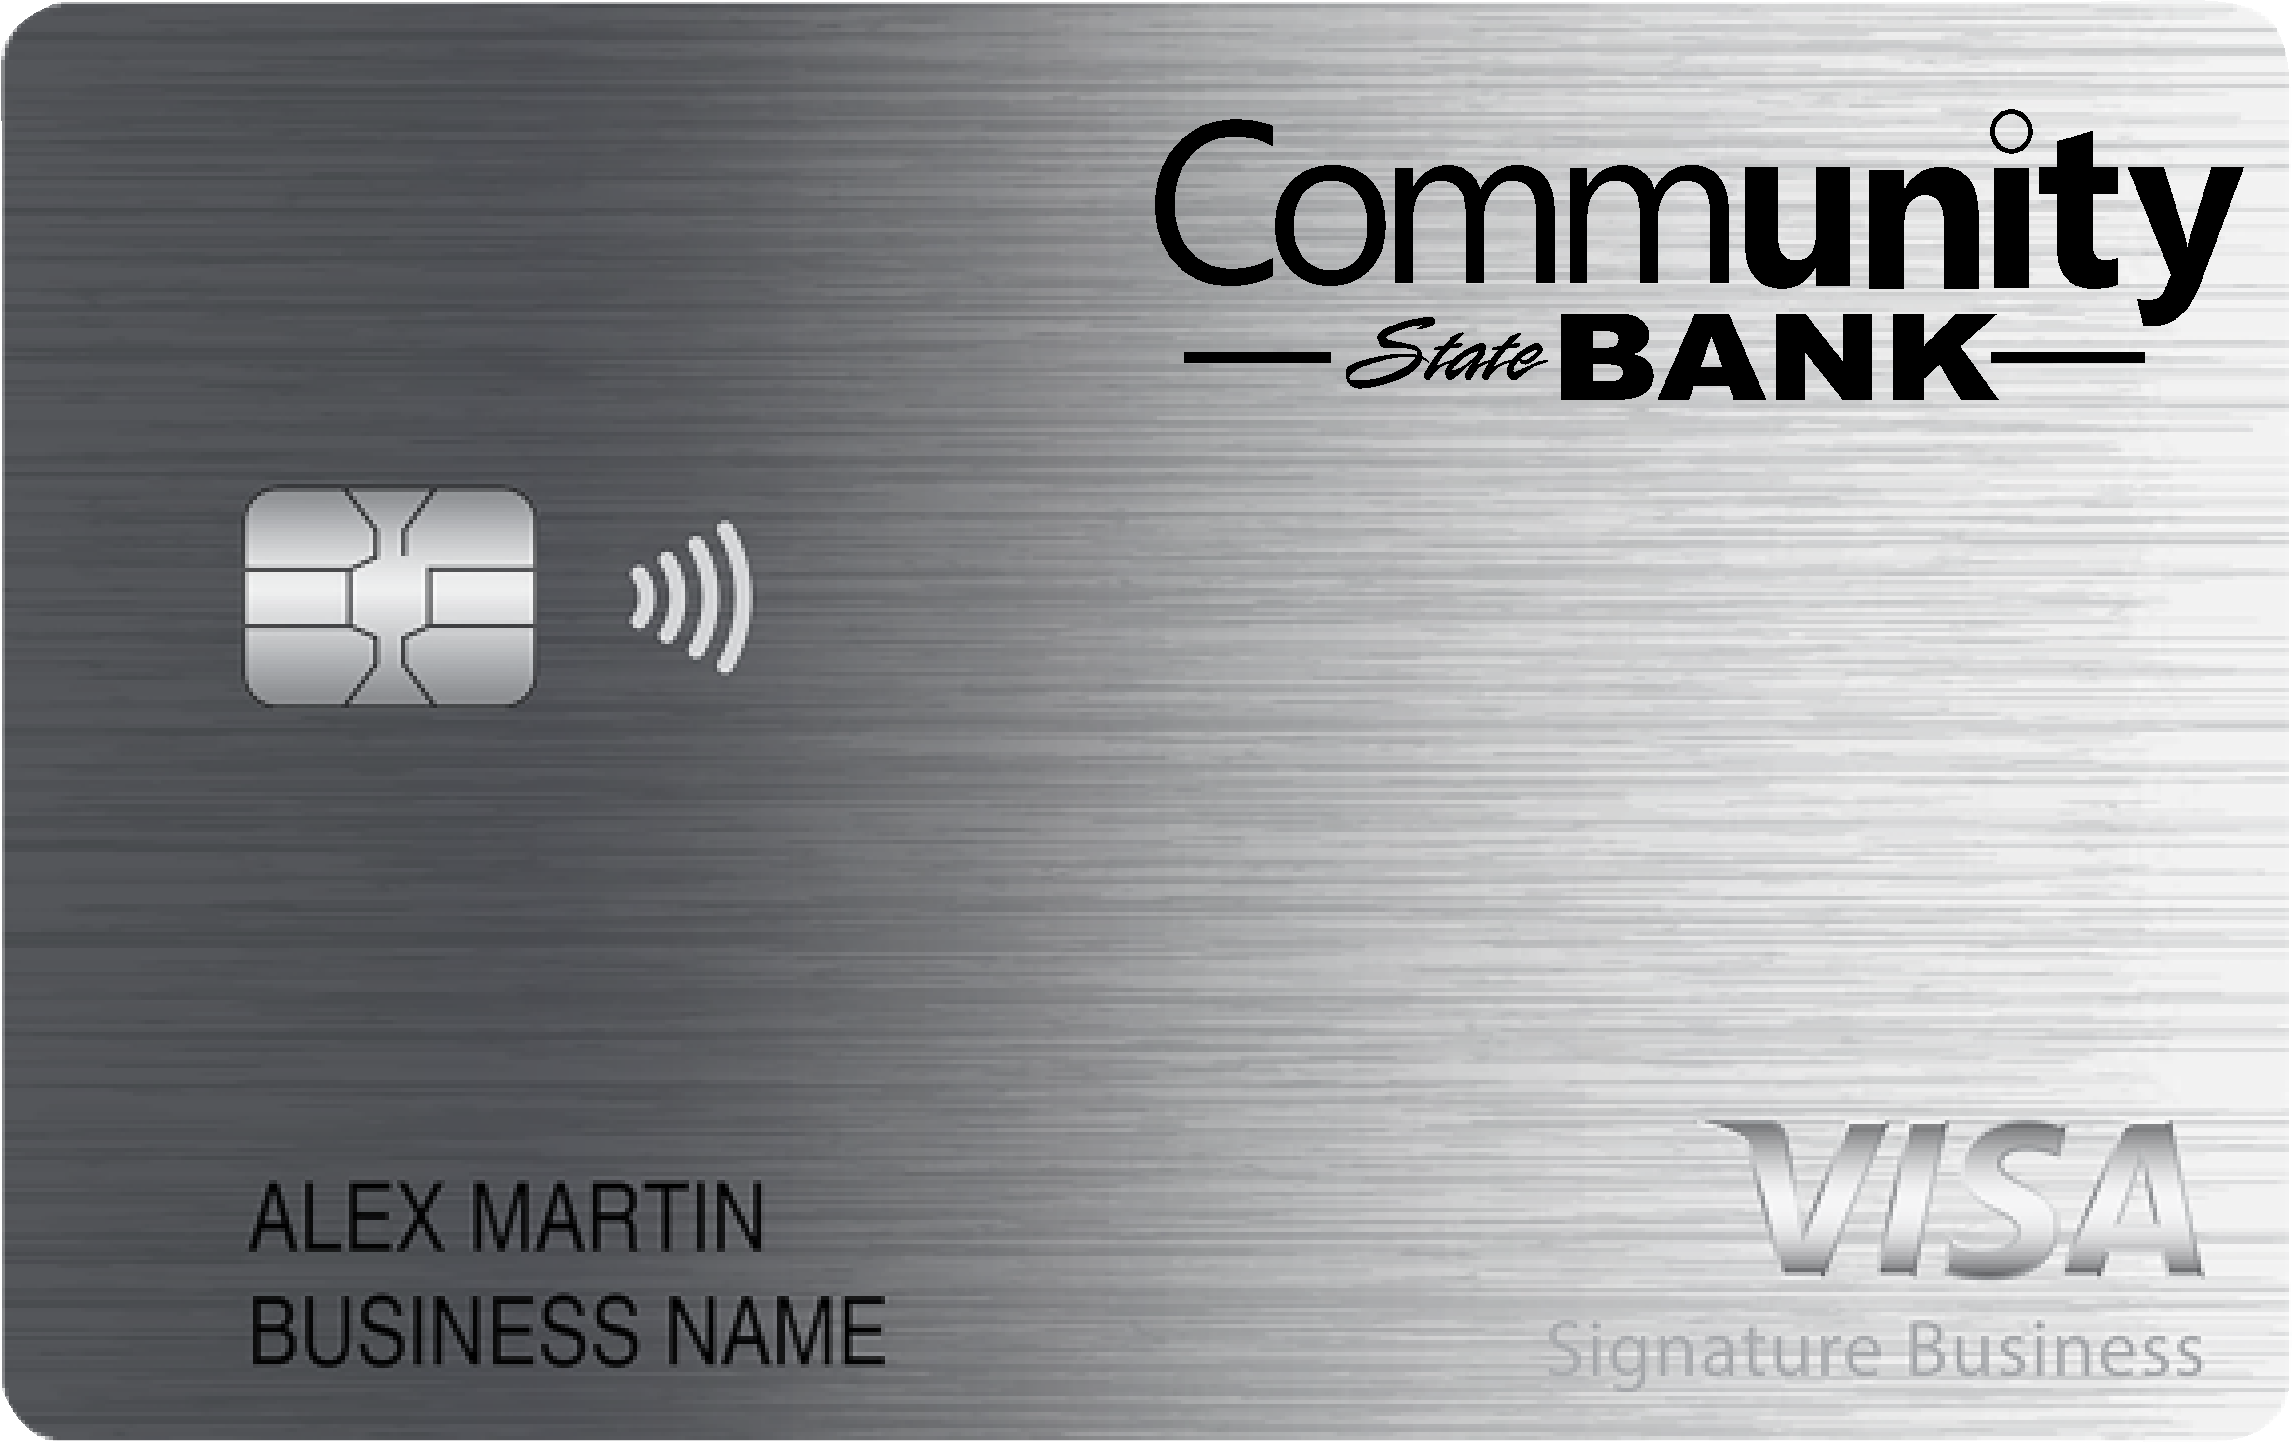 Community State Bank Smart Business Rewards Card